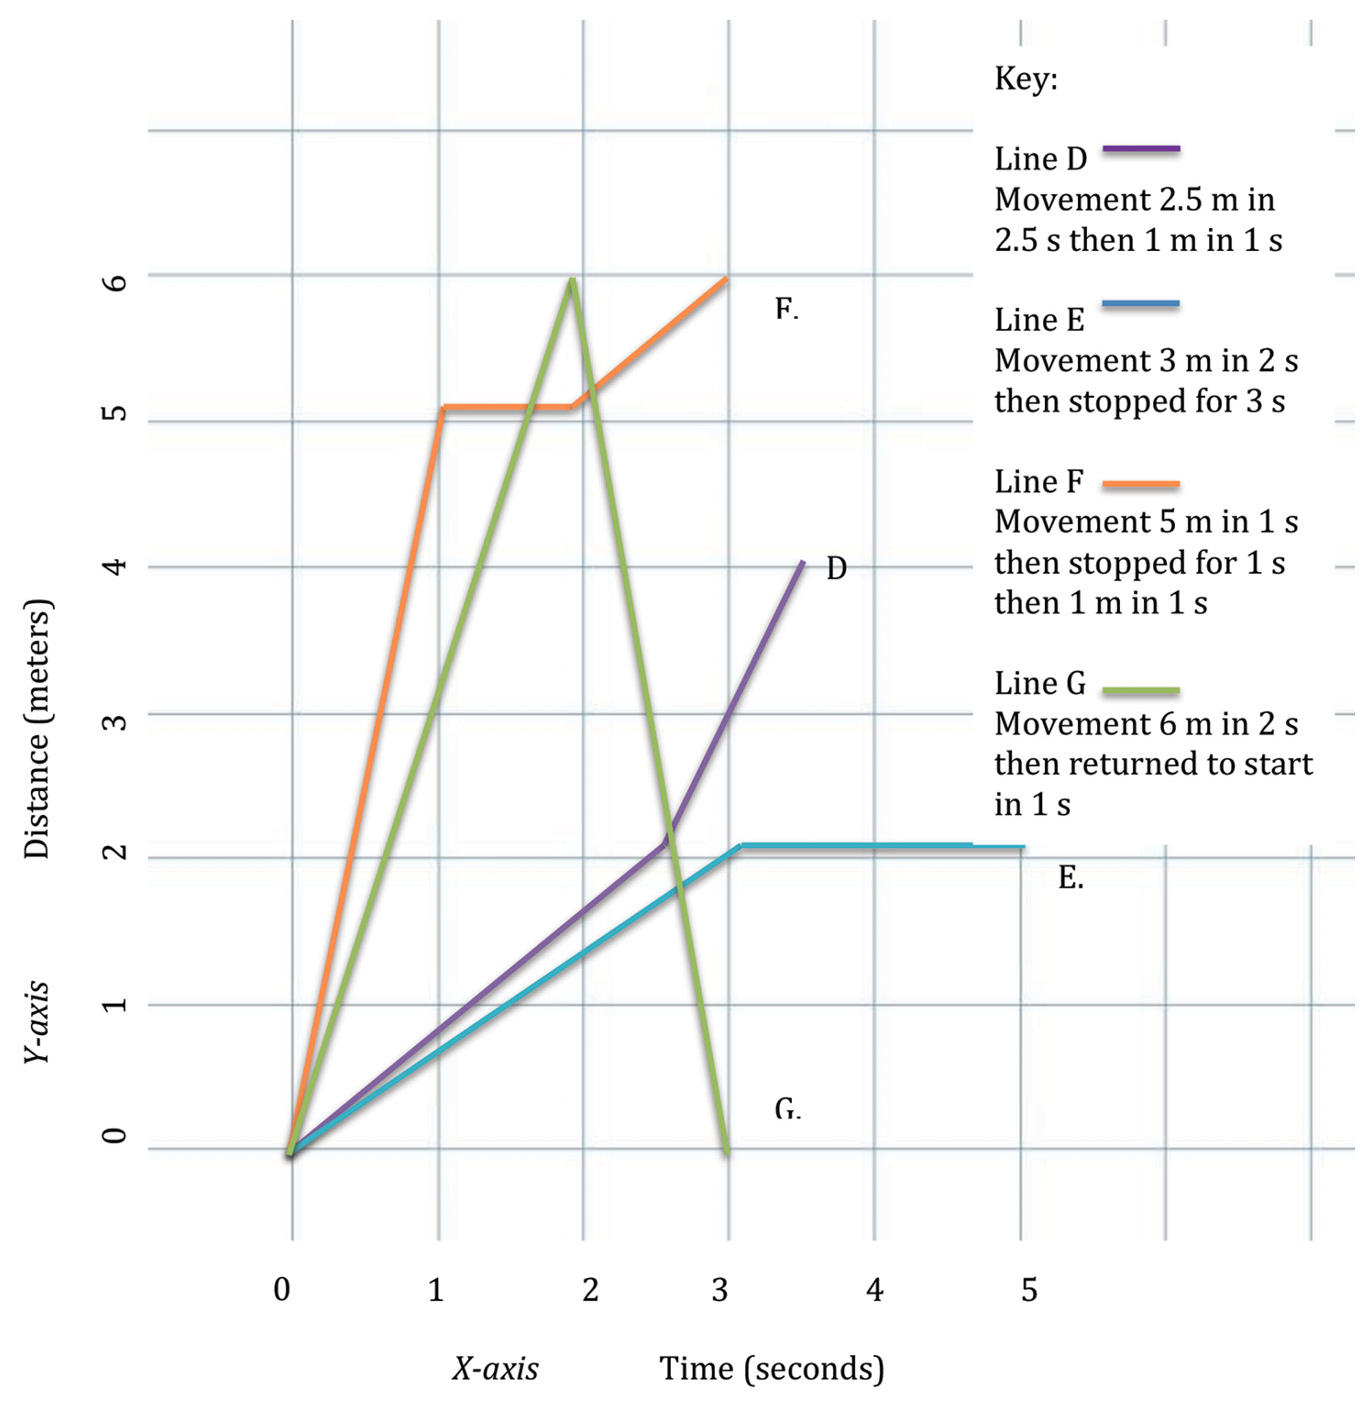  Graph of activity scenarios D, E, F, and G.